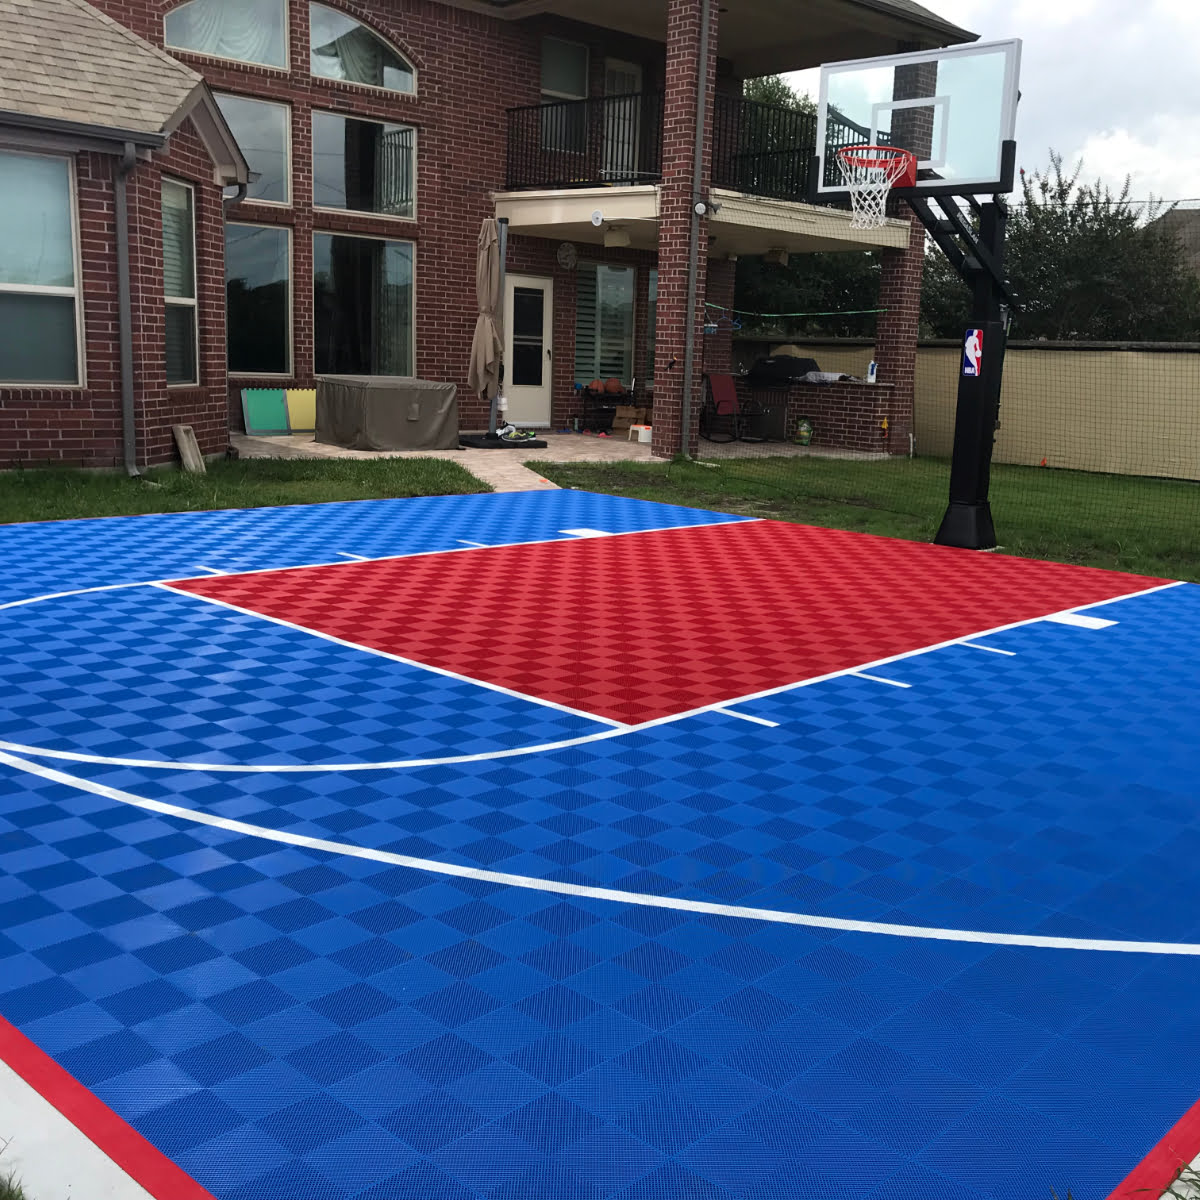 Backyard DIY basketball red and blue